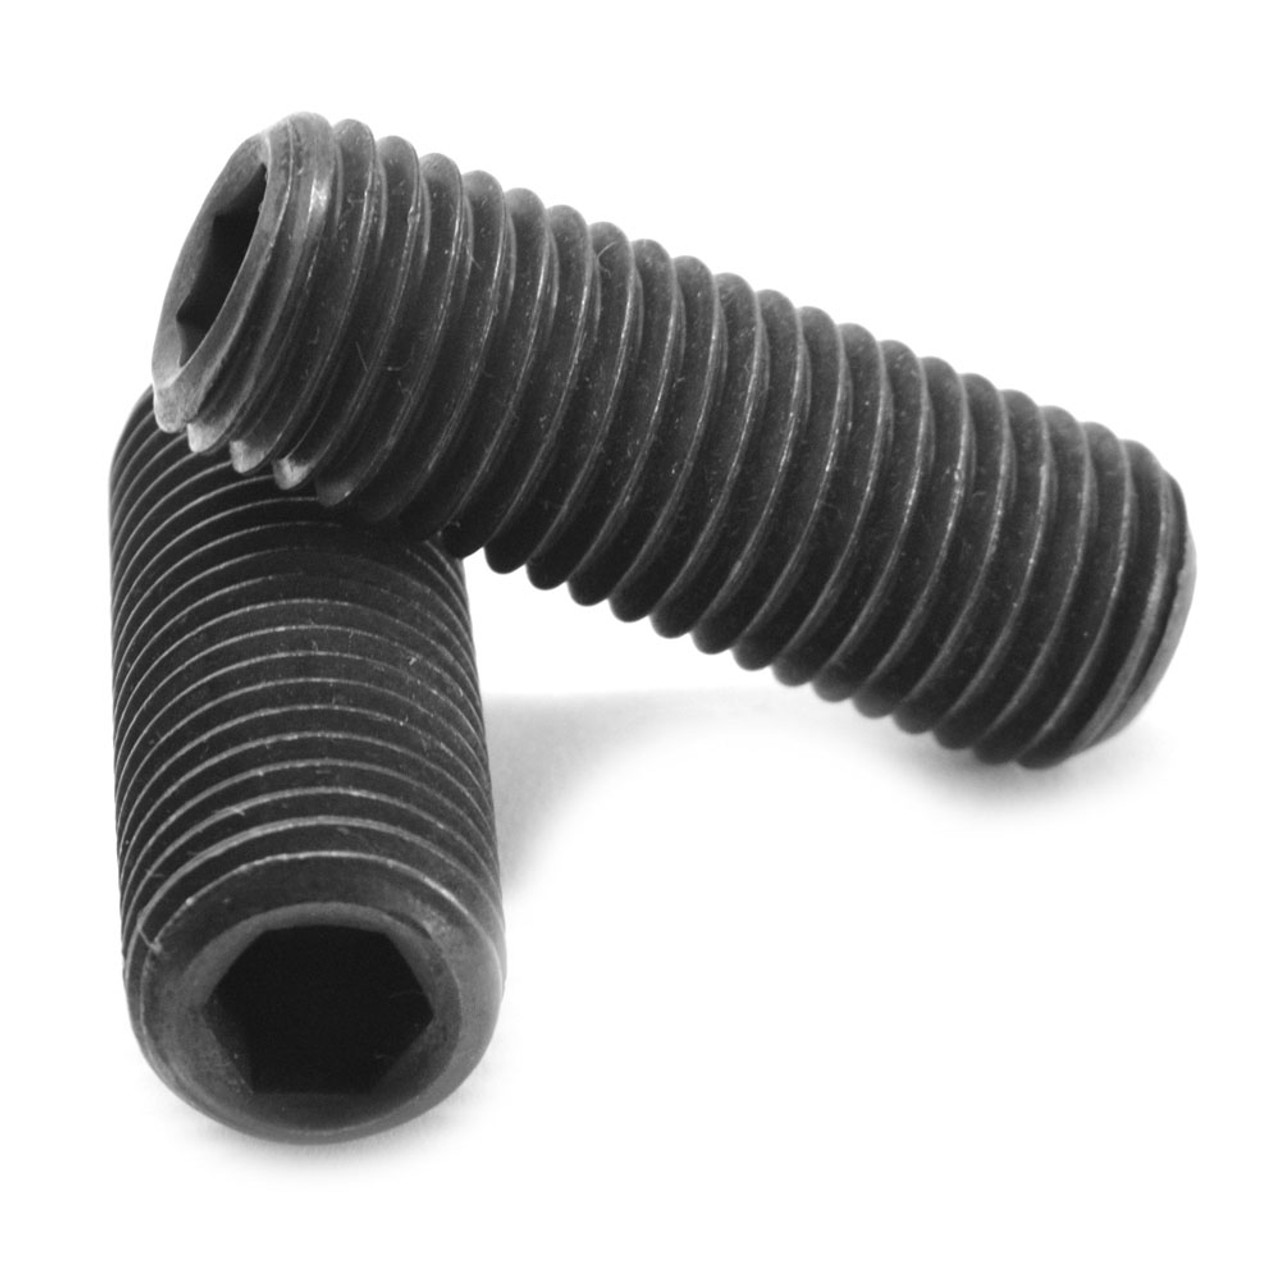 M24 x 3.00 x 35 MM Coarse Thread ISO 4029 / DIN 916 Class 45H Socket Set Screw Cup Point Alloy Steel Black Oxide